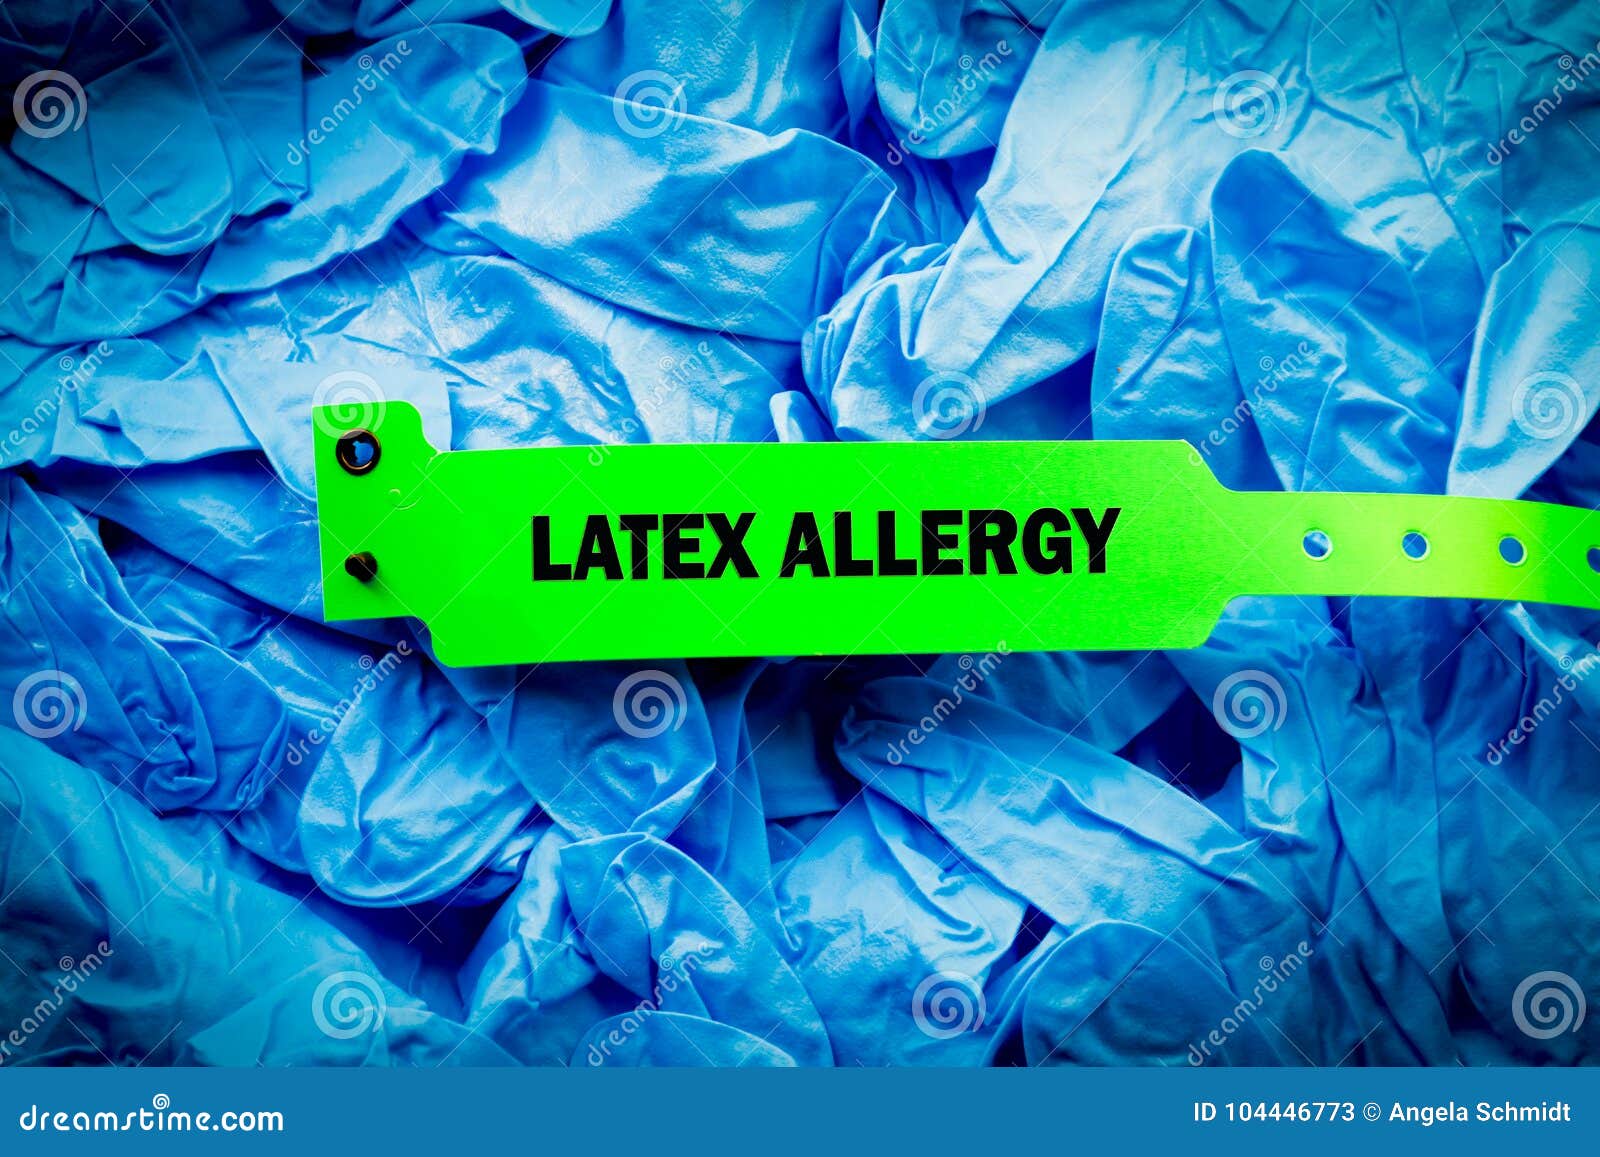 Latex Allergy Rash stock image Image of hand immunization  36243311